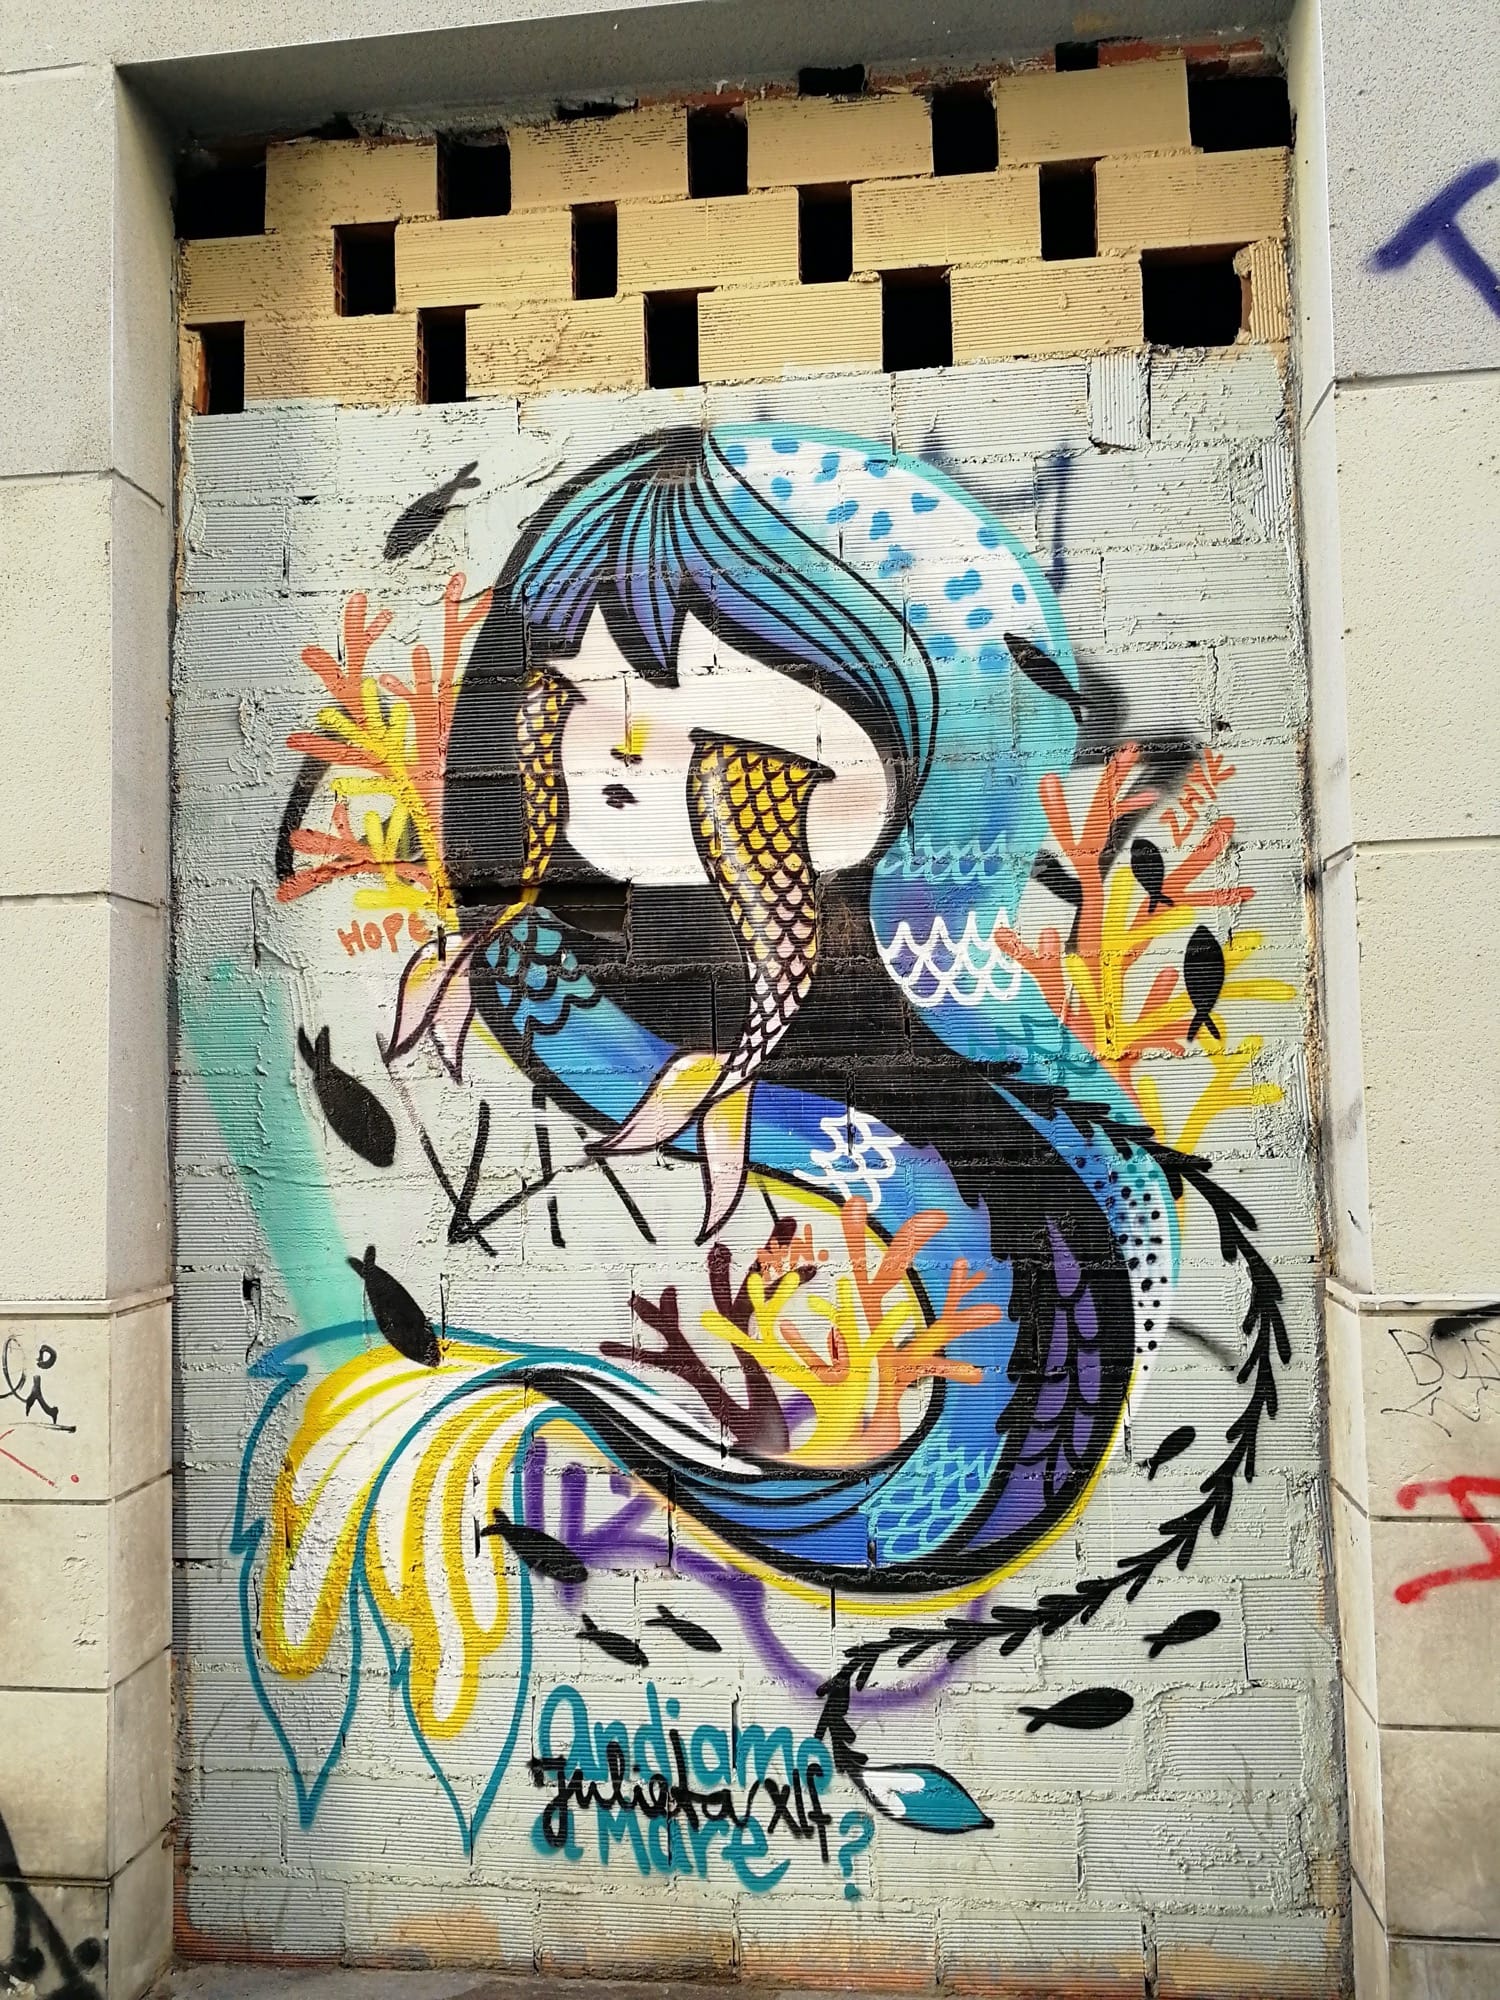 Graffiti 3705  by the artist Julieta xlf captured by Rabot in València Spain